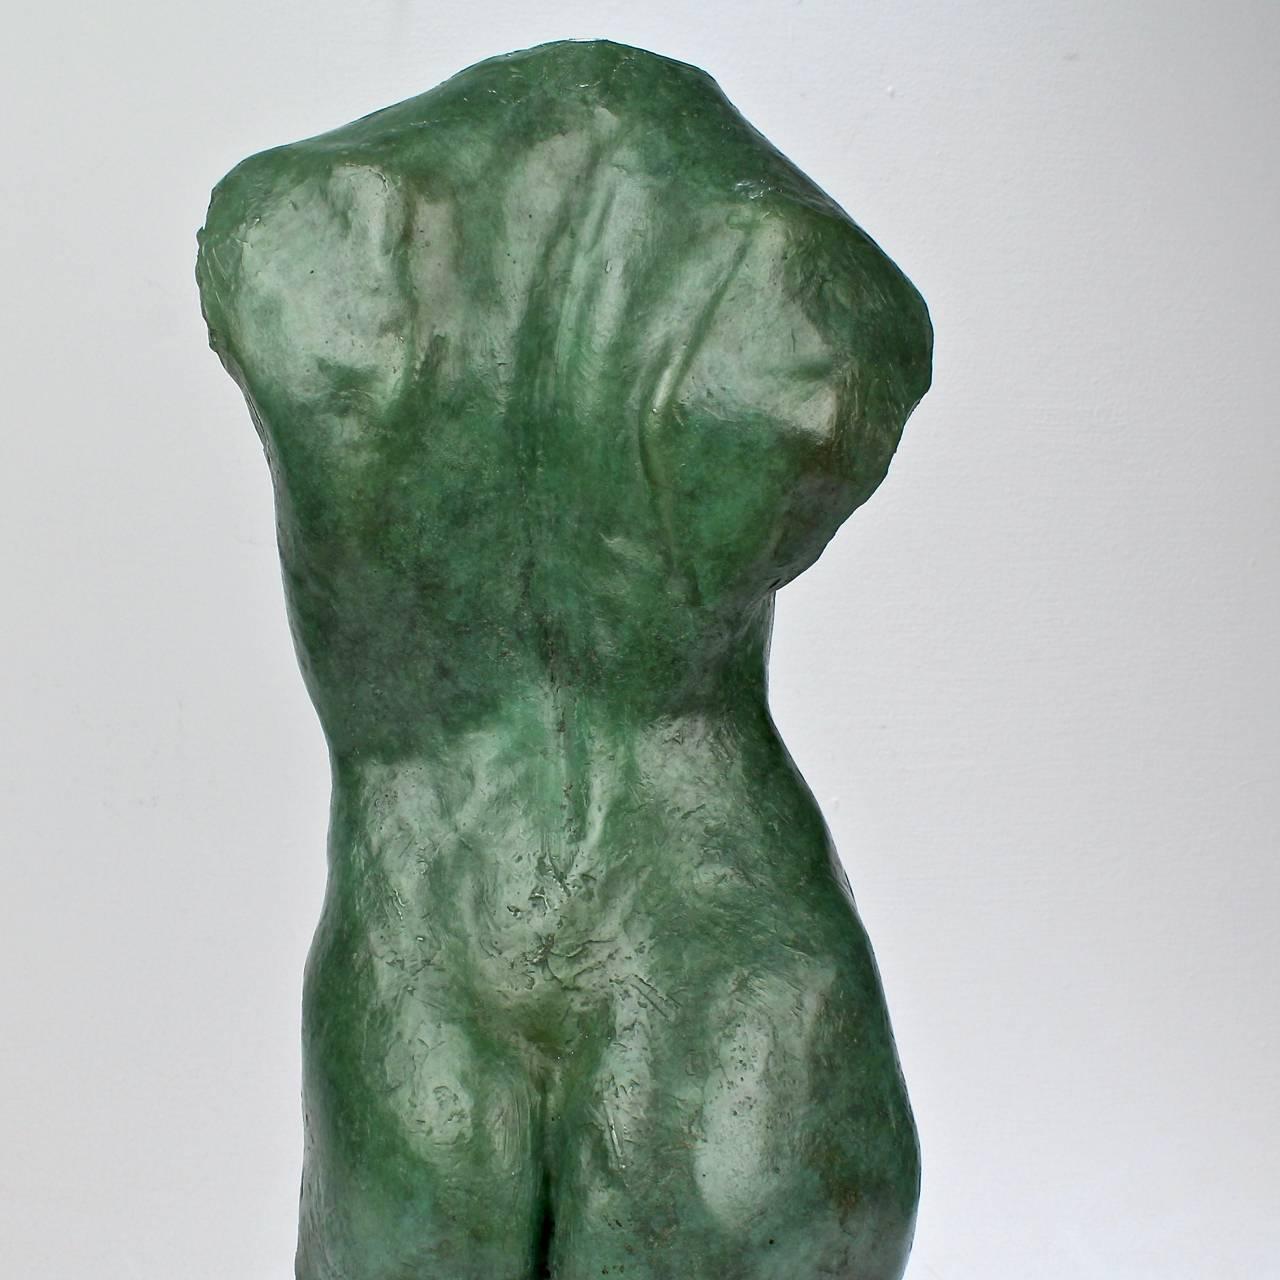 Patinated Cassiopeia, a Nude Female Torso Bronze Sculpture by Julia Levitina, 2009